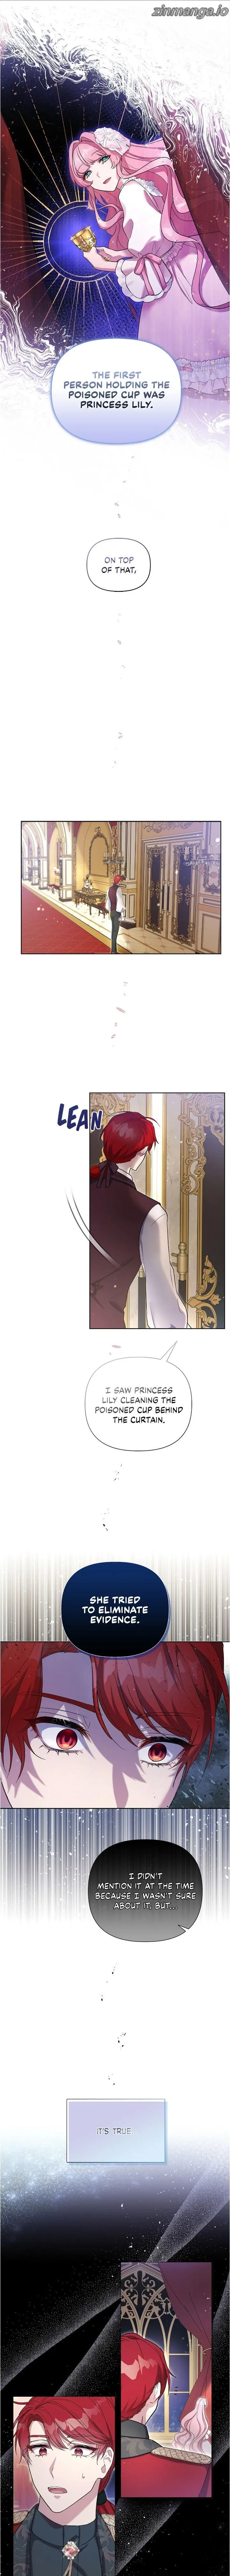 The Villainous Princess Won’t Tolerate a Bad Ending chapter 7